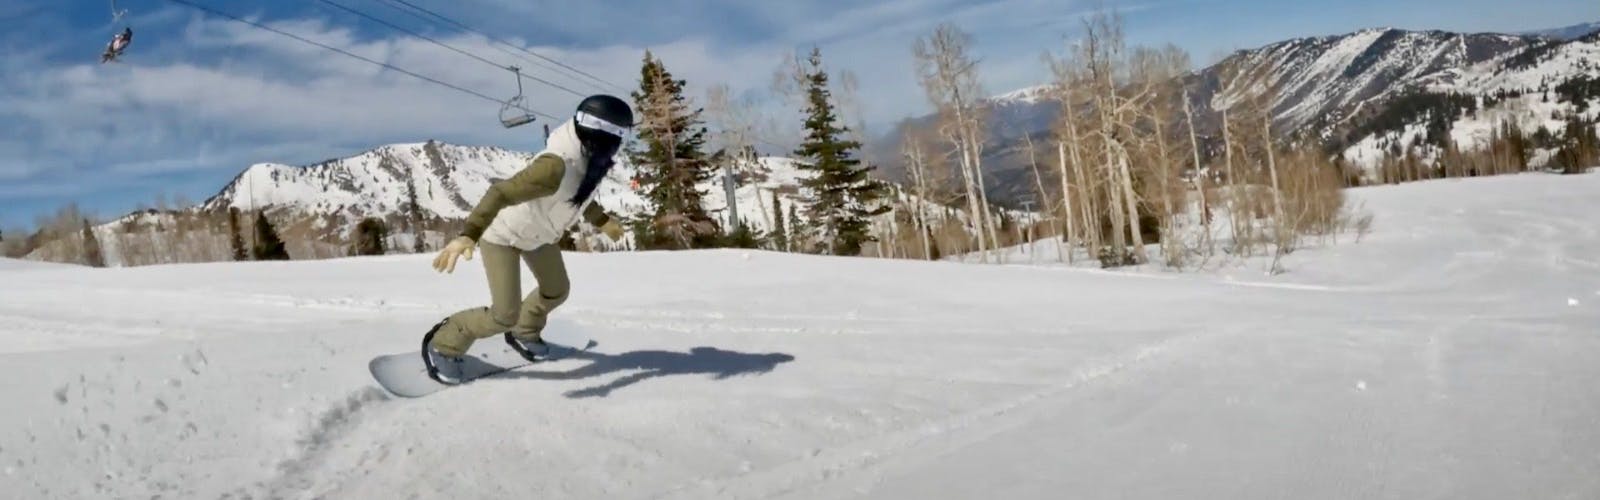 Snowboard Expert Sydney Johnson riding the Burton Family Tree 3D Daily Driver snowboard on a groomer run